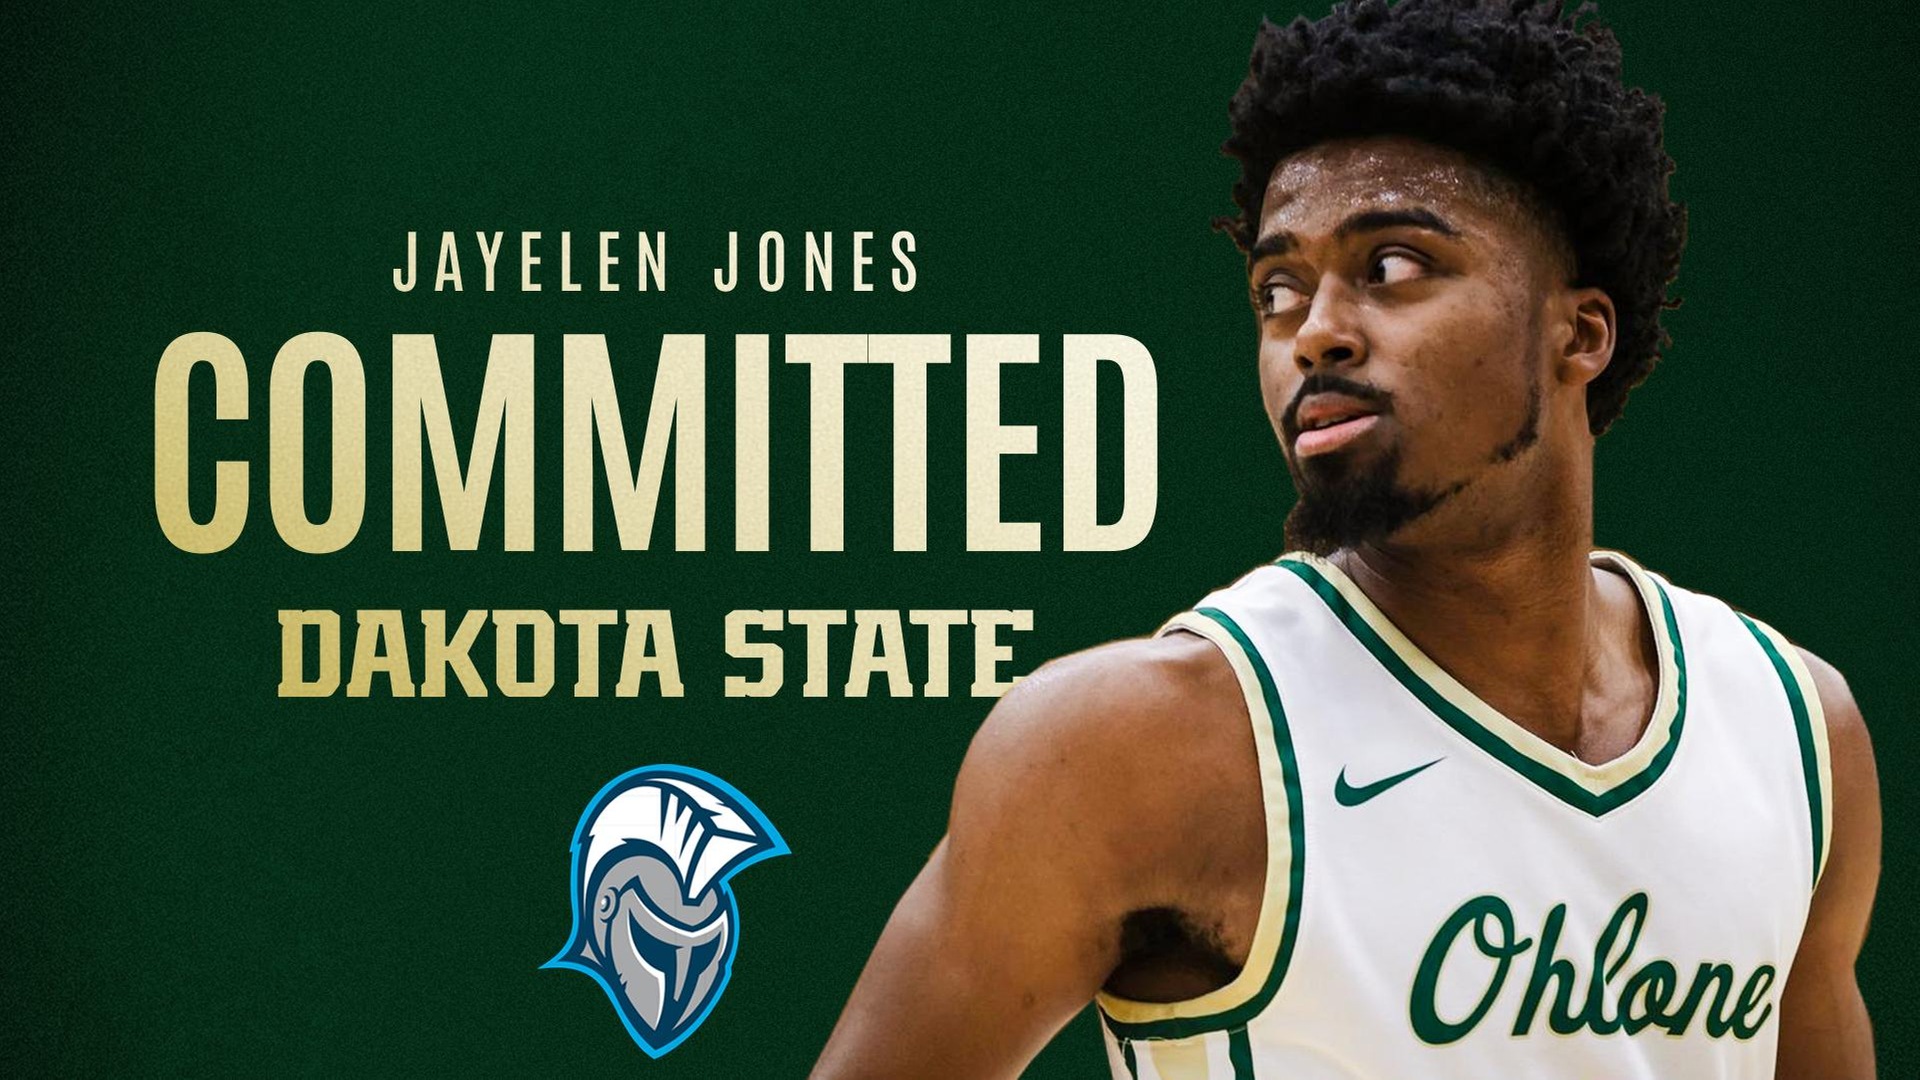 Jayelen Jones Commits to Dakota State University